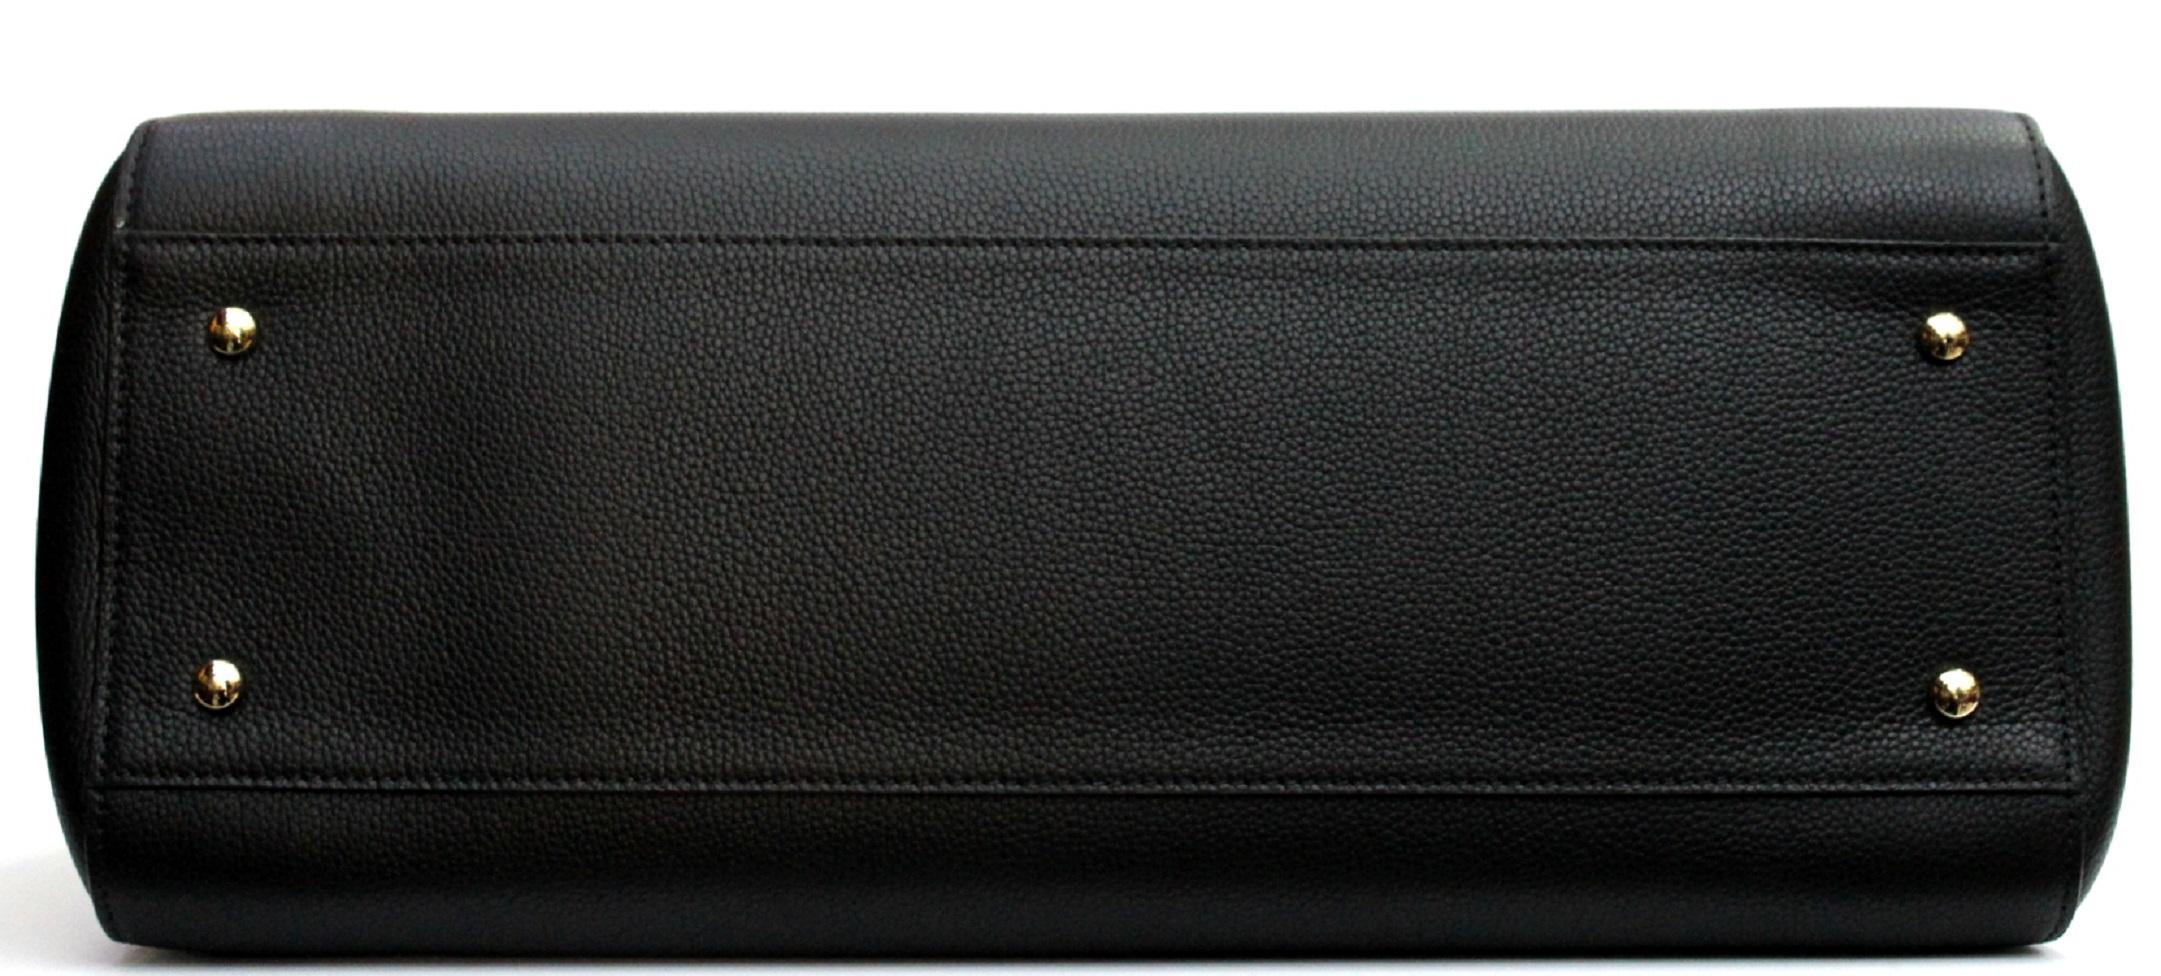 2017 Chanel Black Leather Neo Executive Bag 1